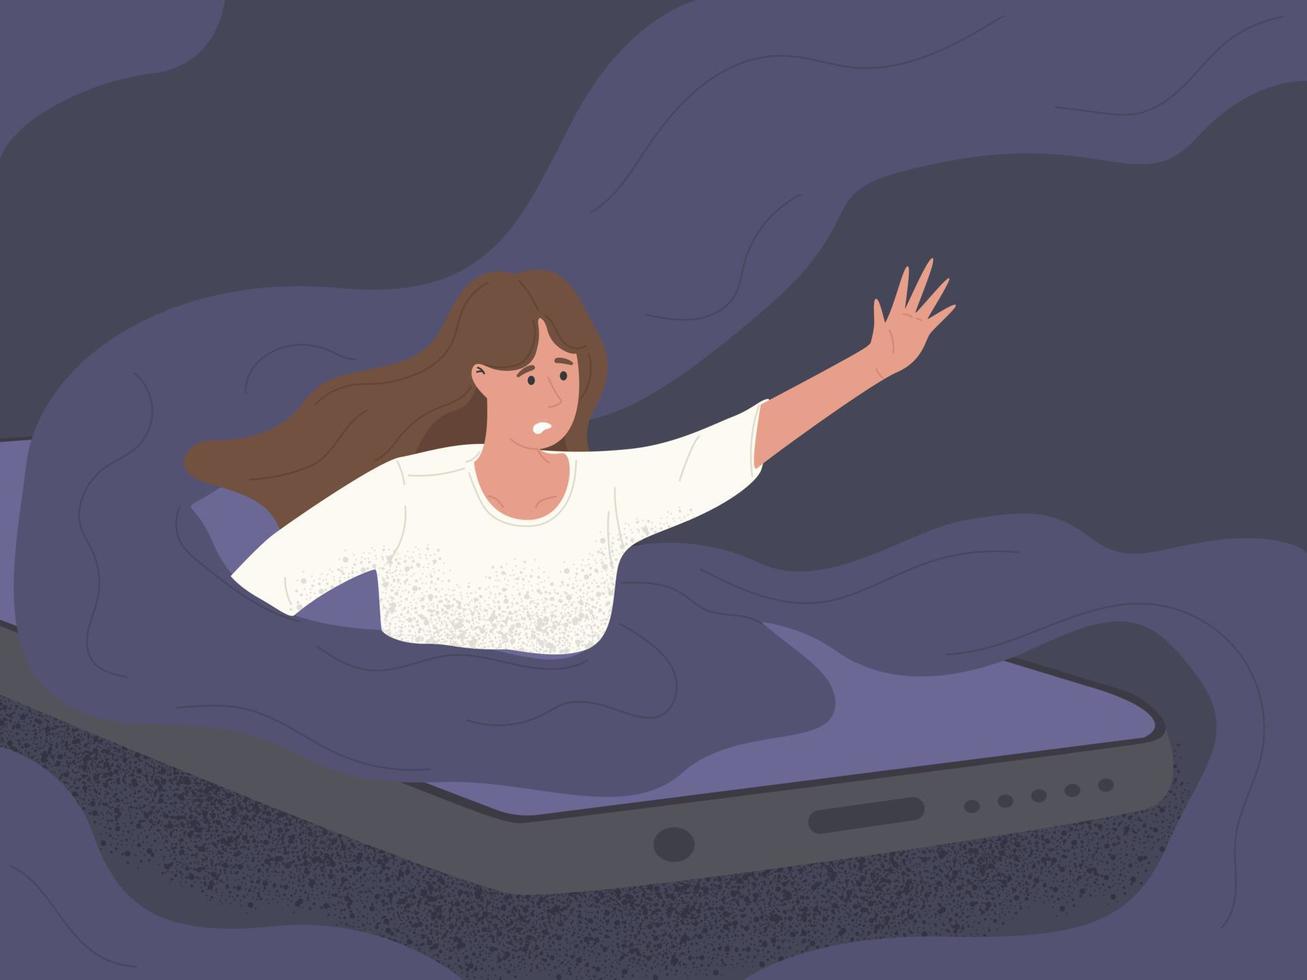 women character drowning in social media phone illustration vector